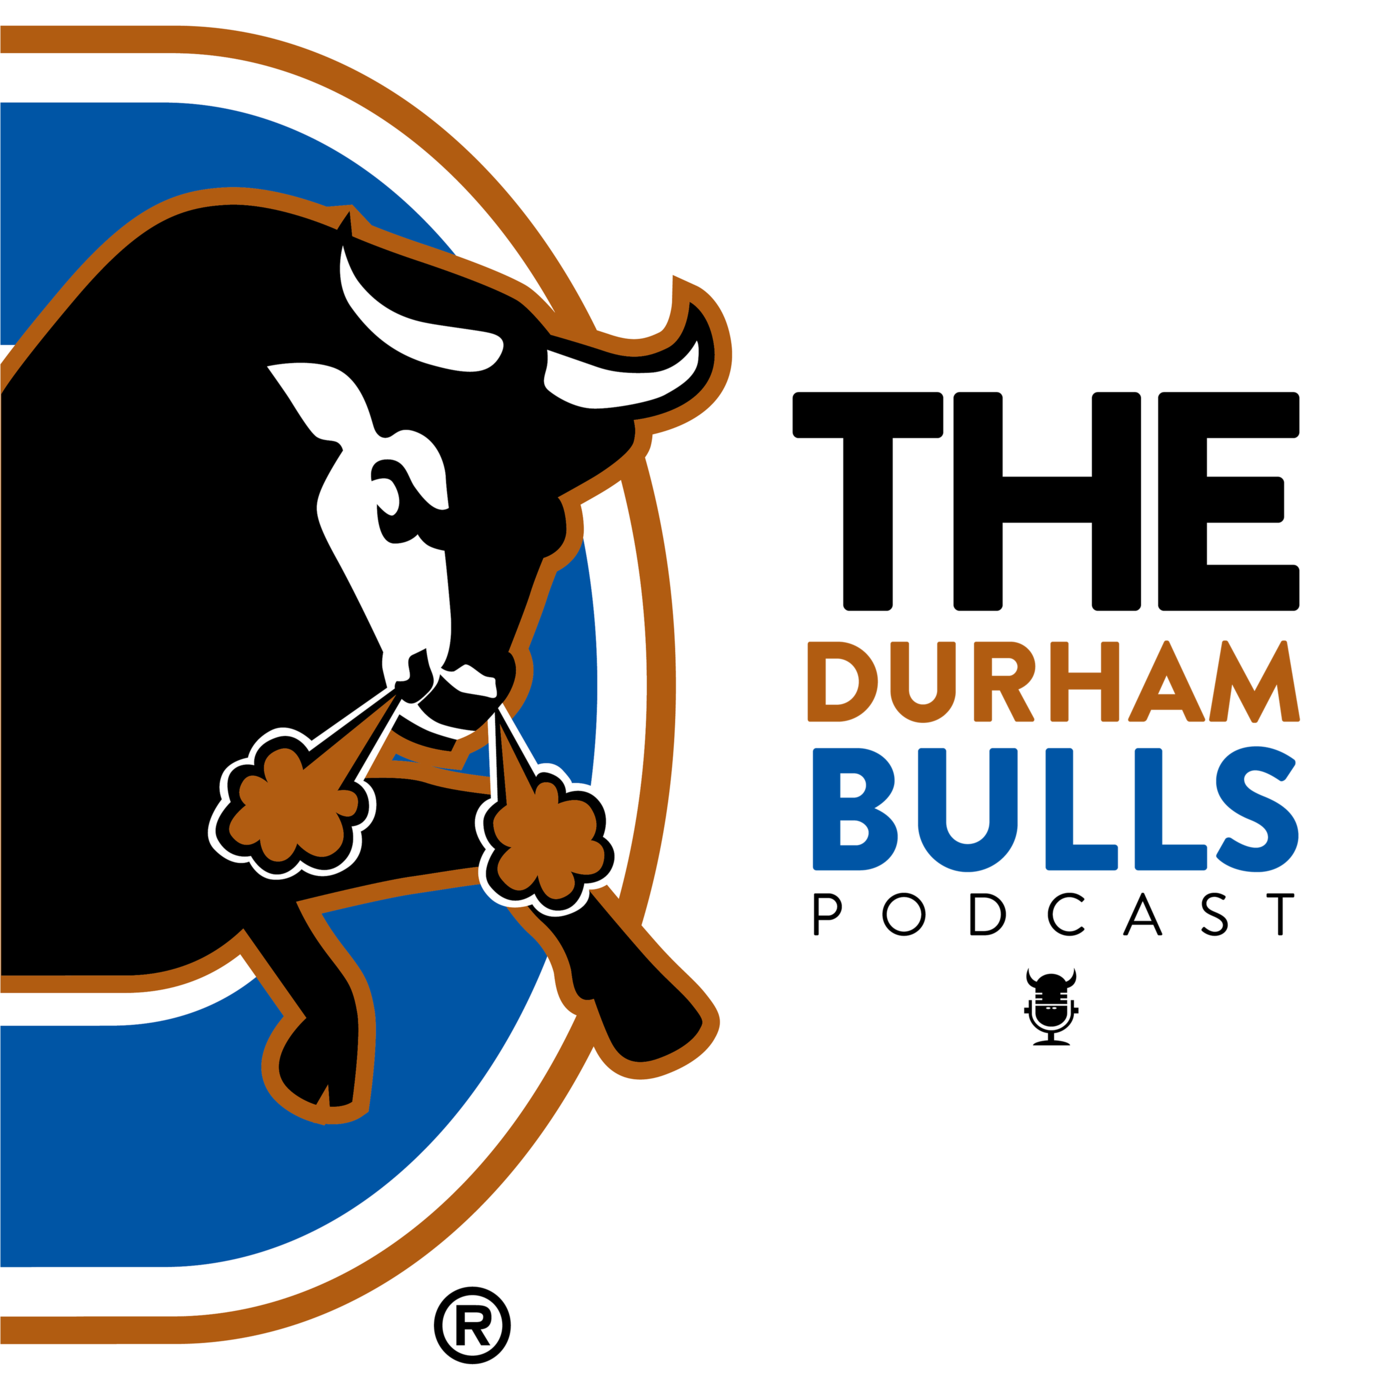 Cole Figueroa: Durham Bulls 2012-14; Director, Baseball Operations, Tampa Bay Rays